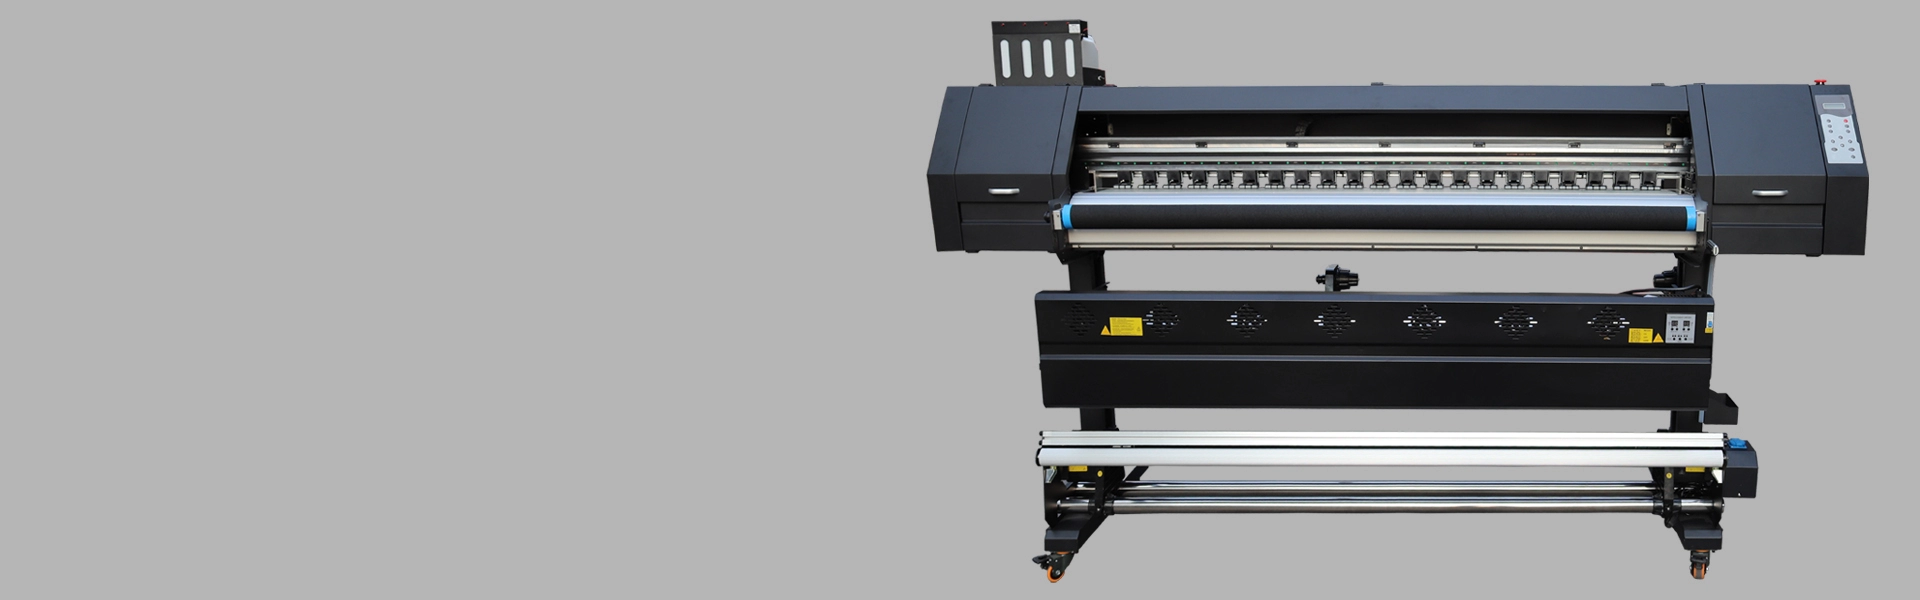 I3200 Sublimation OLLIN-E1804 Printer